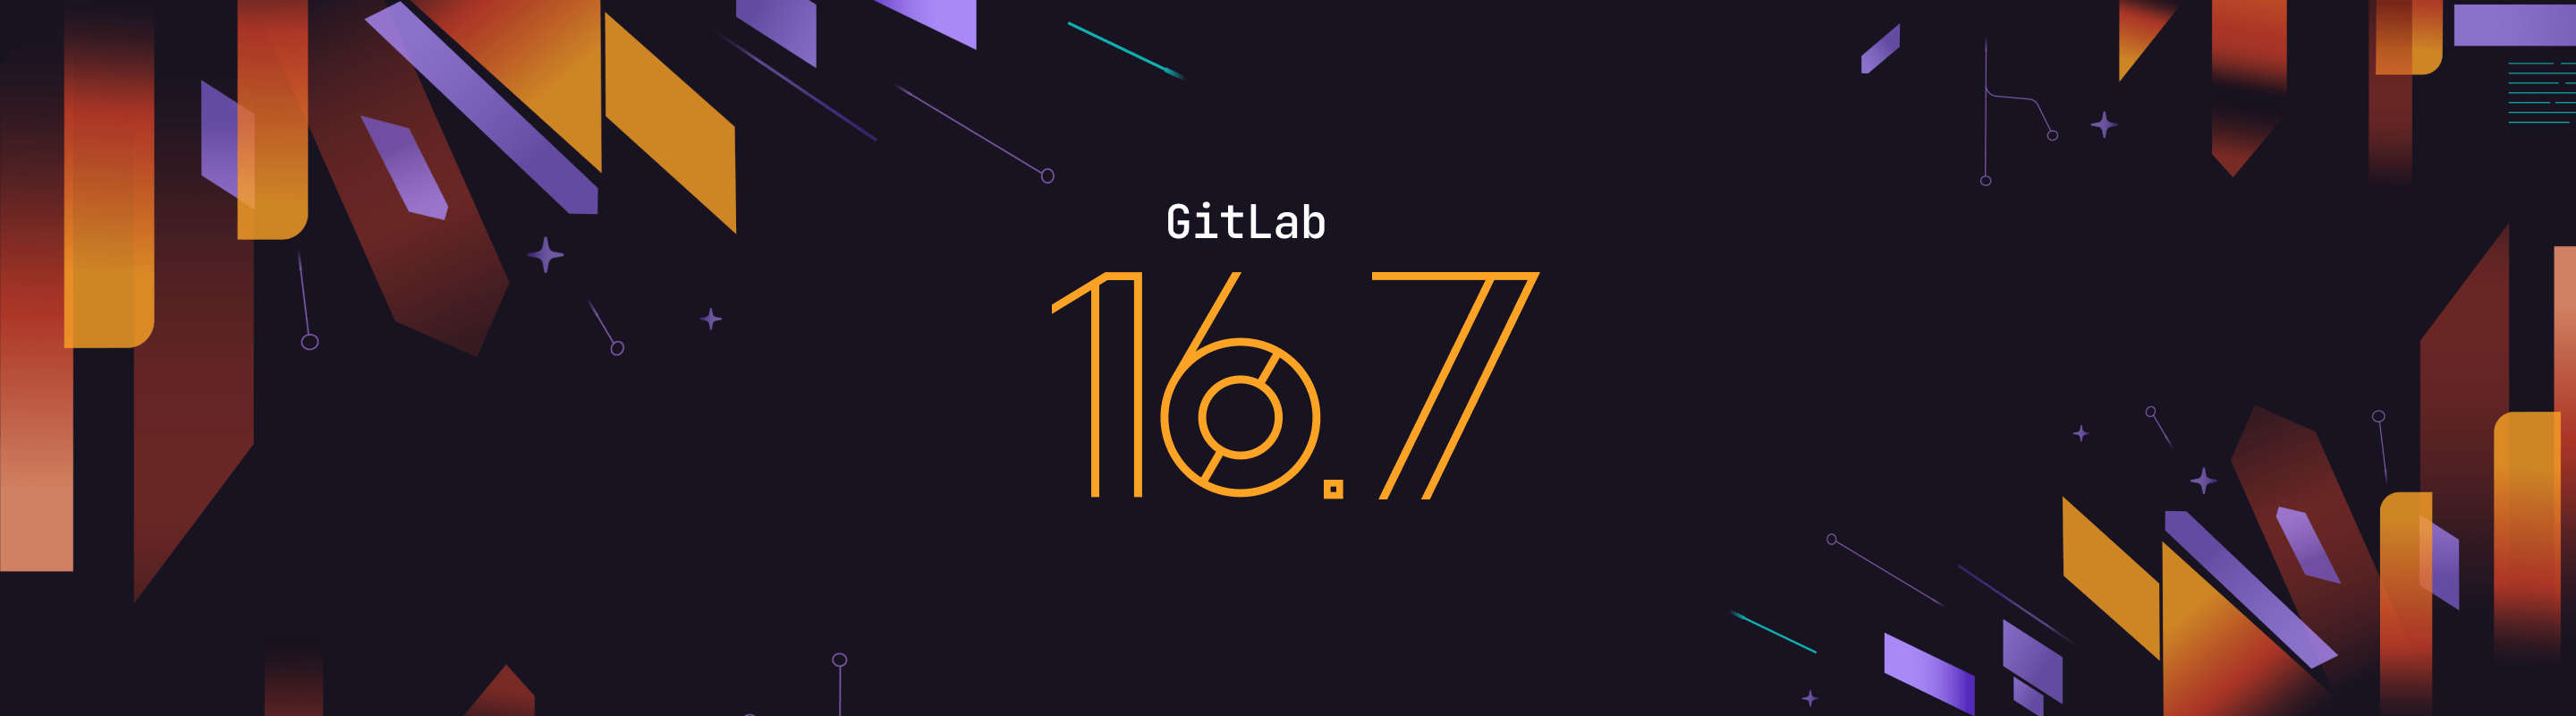 GitLab 16.7